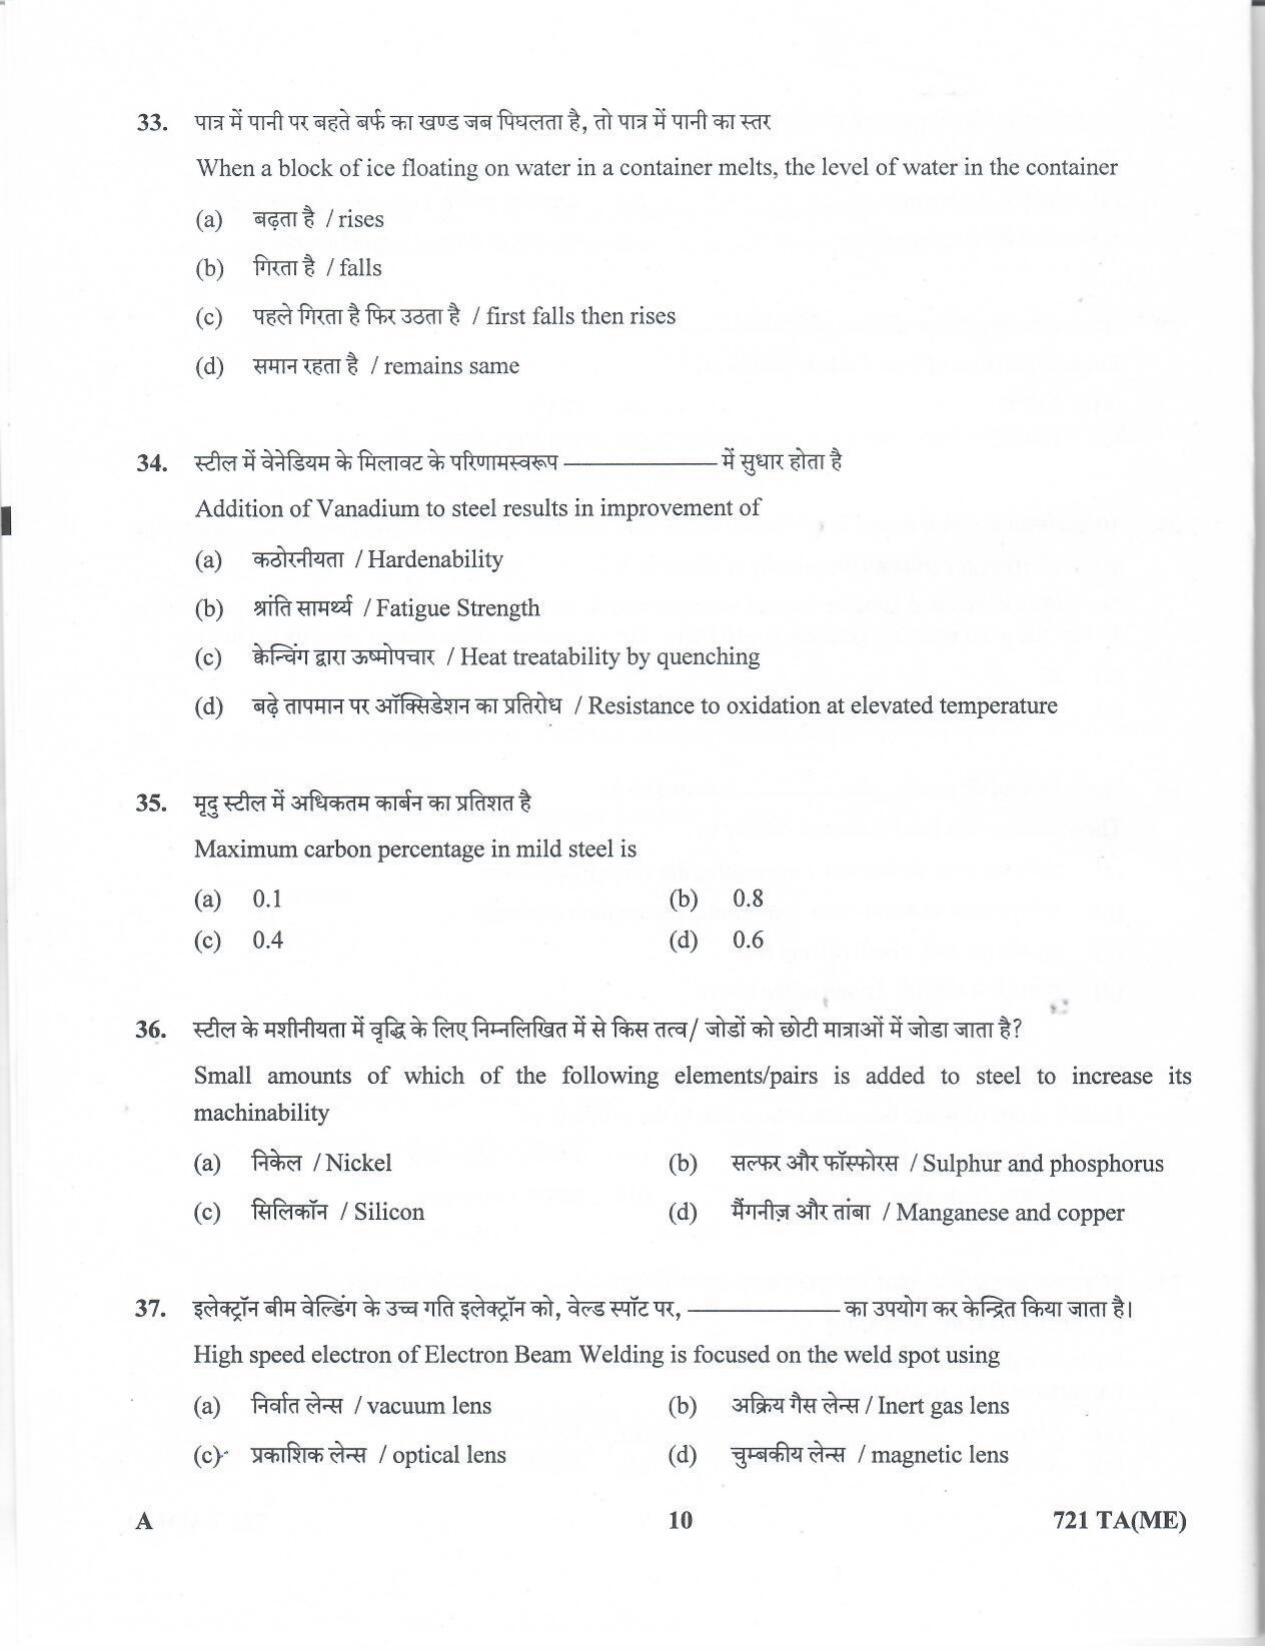 LPSC Technical Assistant (Mechanical) 2020 Question Paper - Page 9